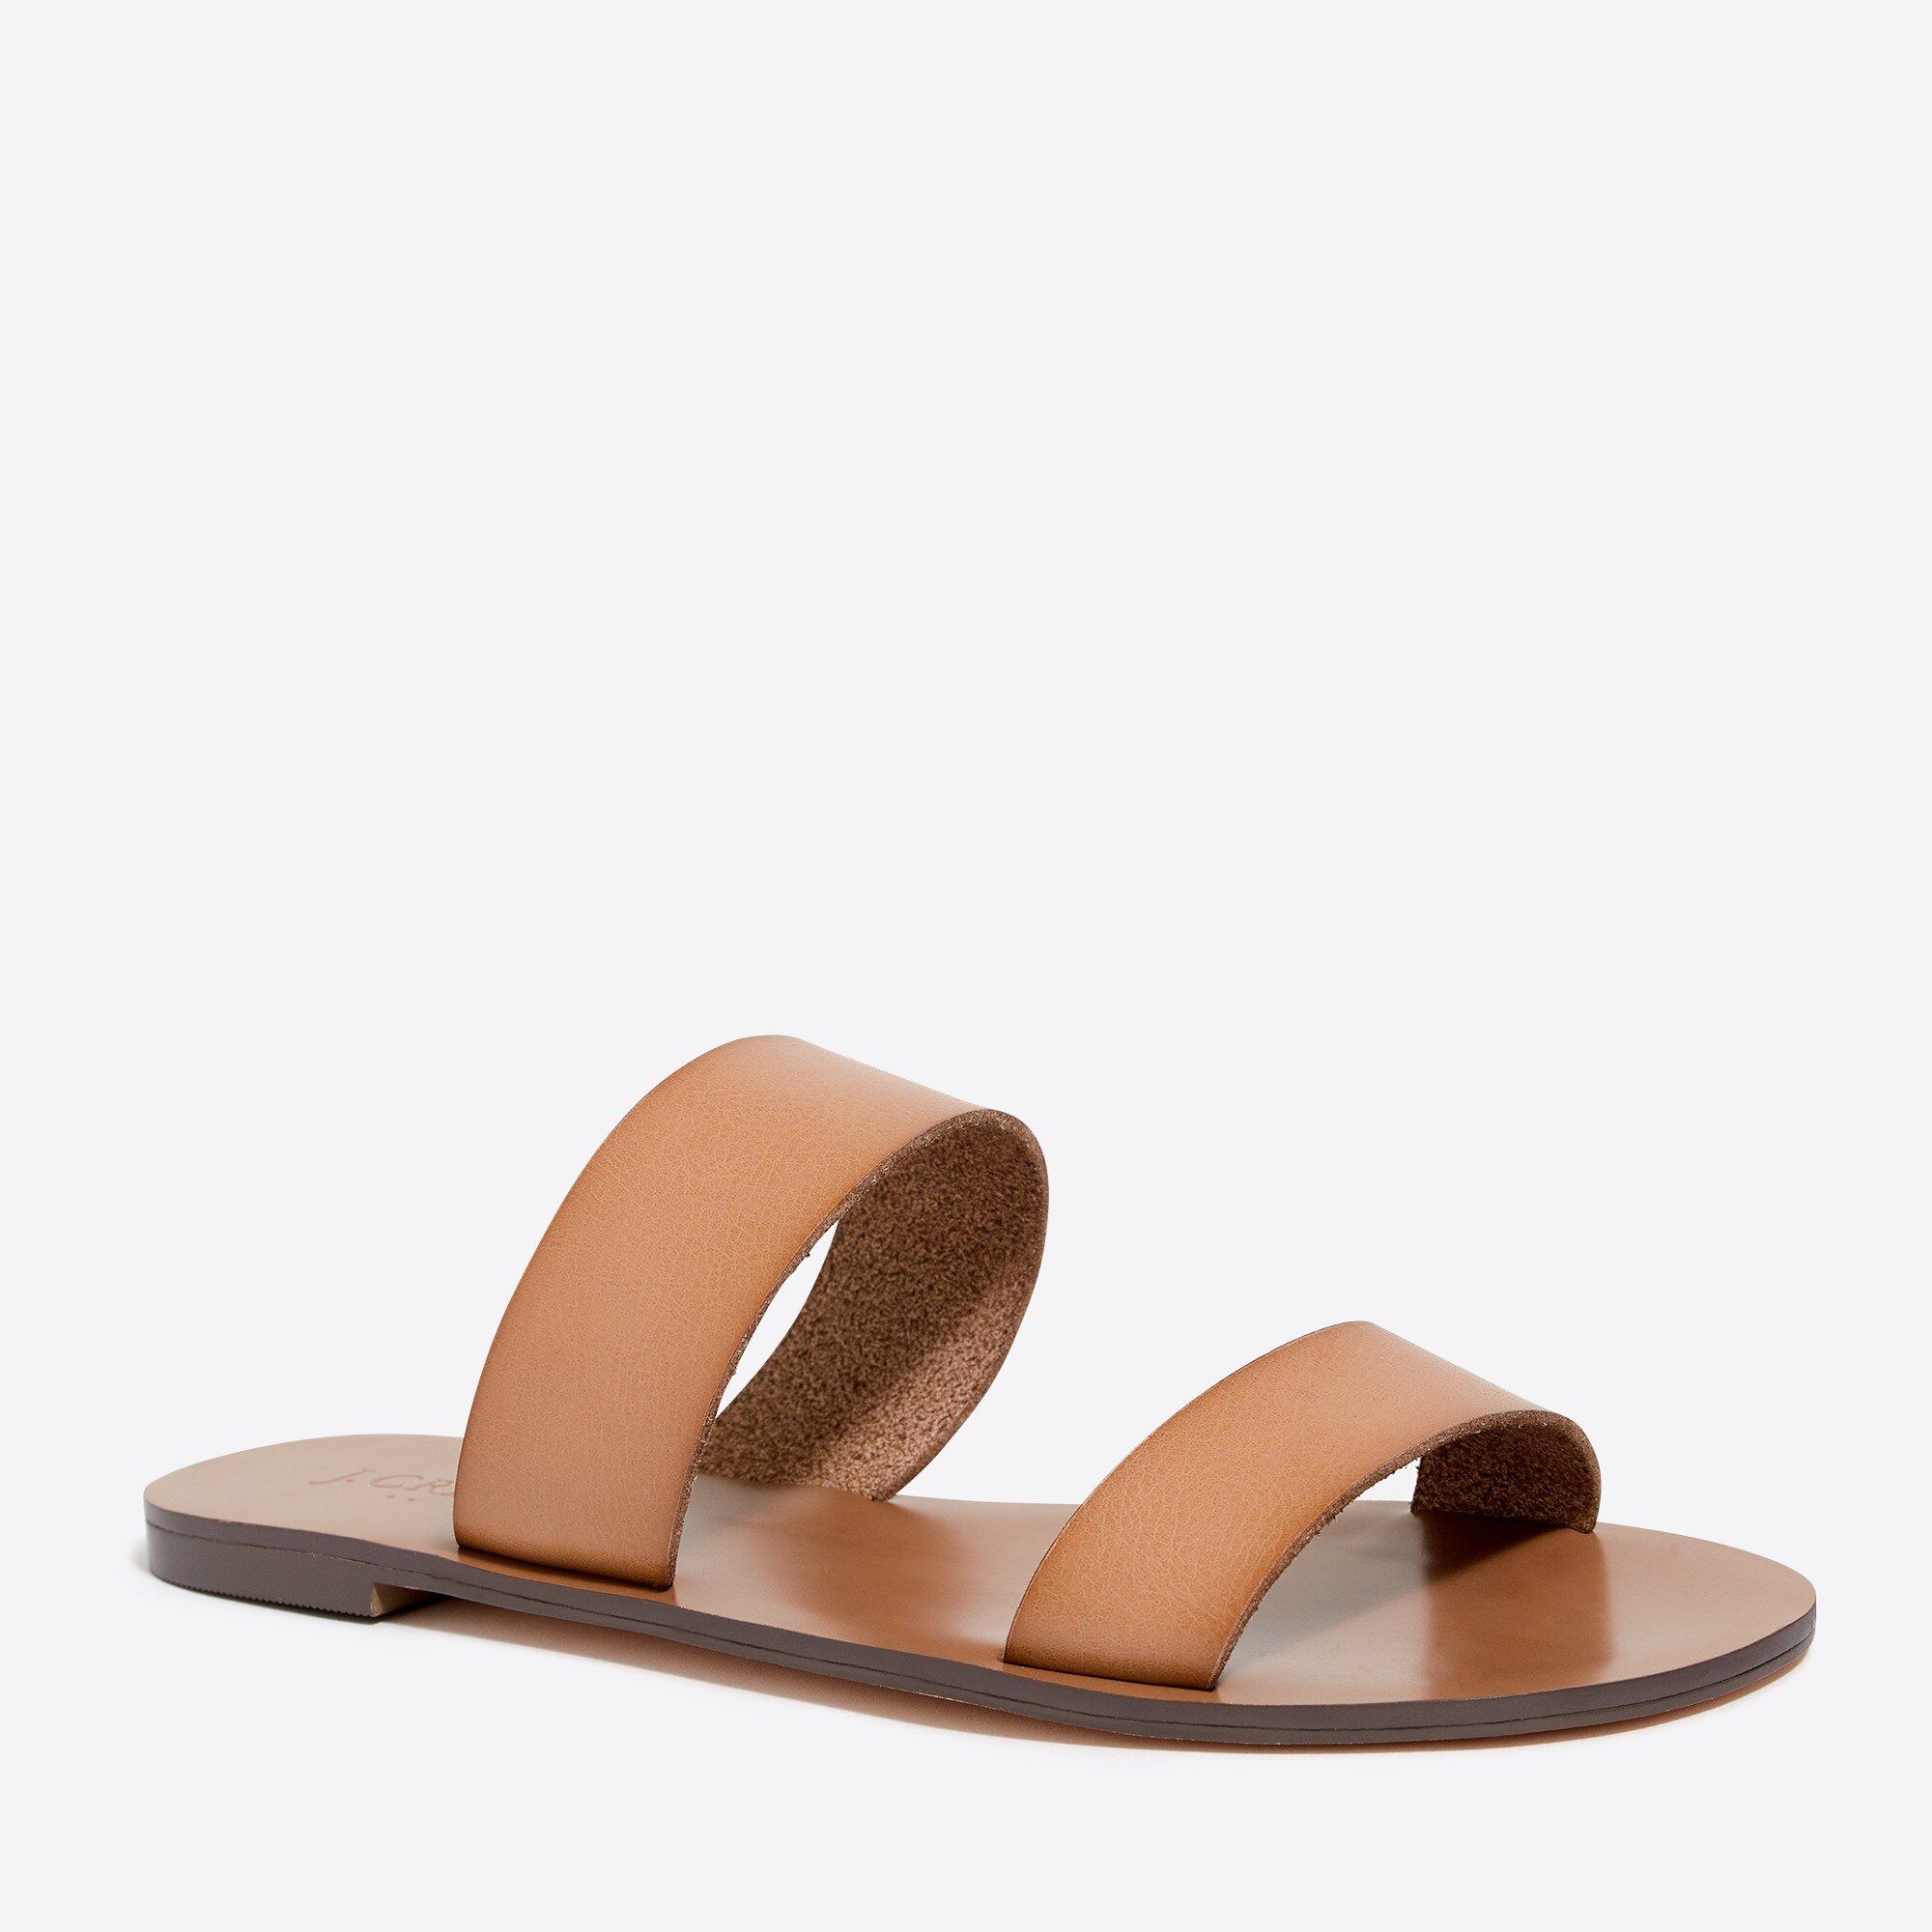 Boardwalk sandals | J.Crew Factory